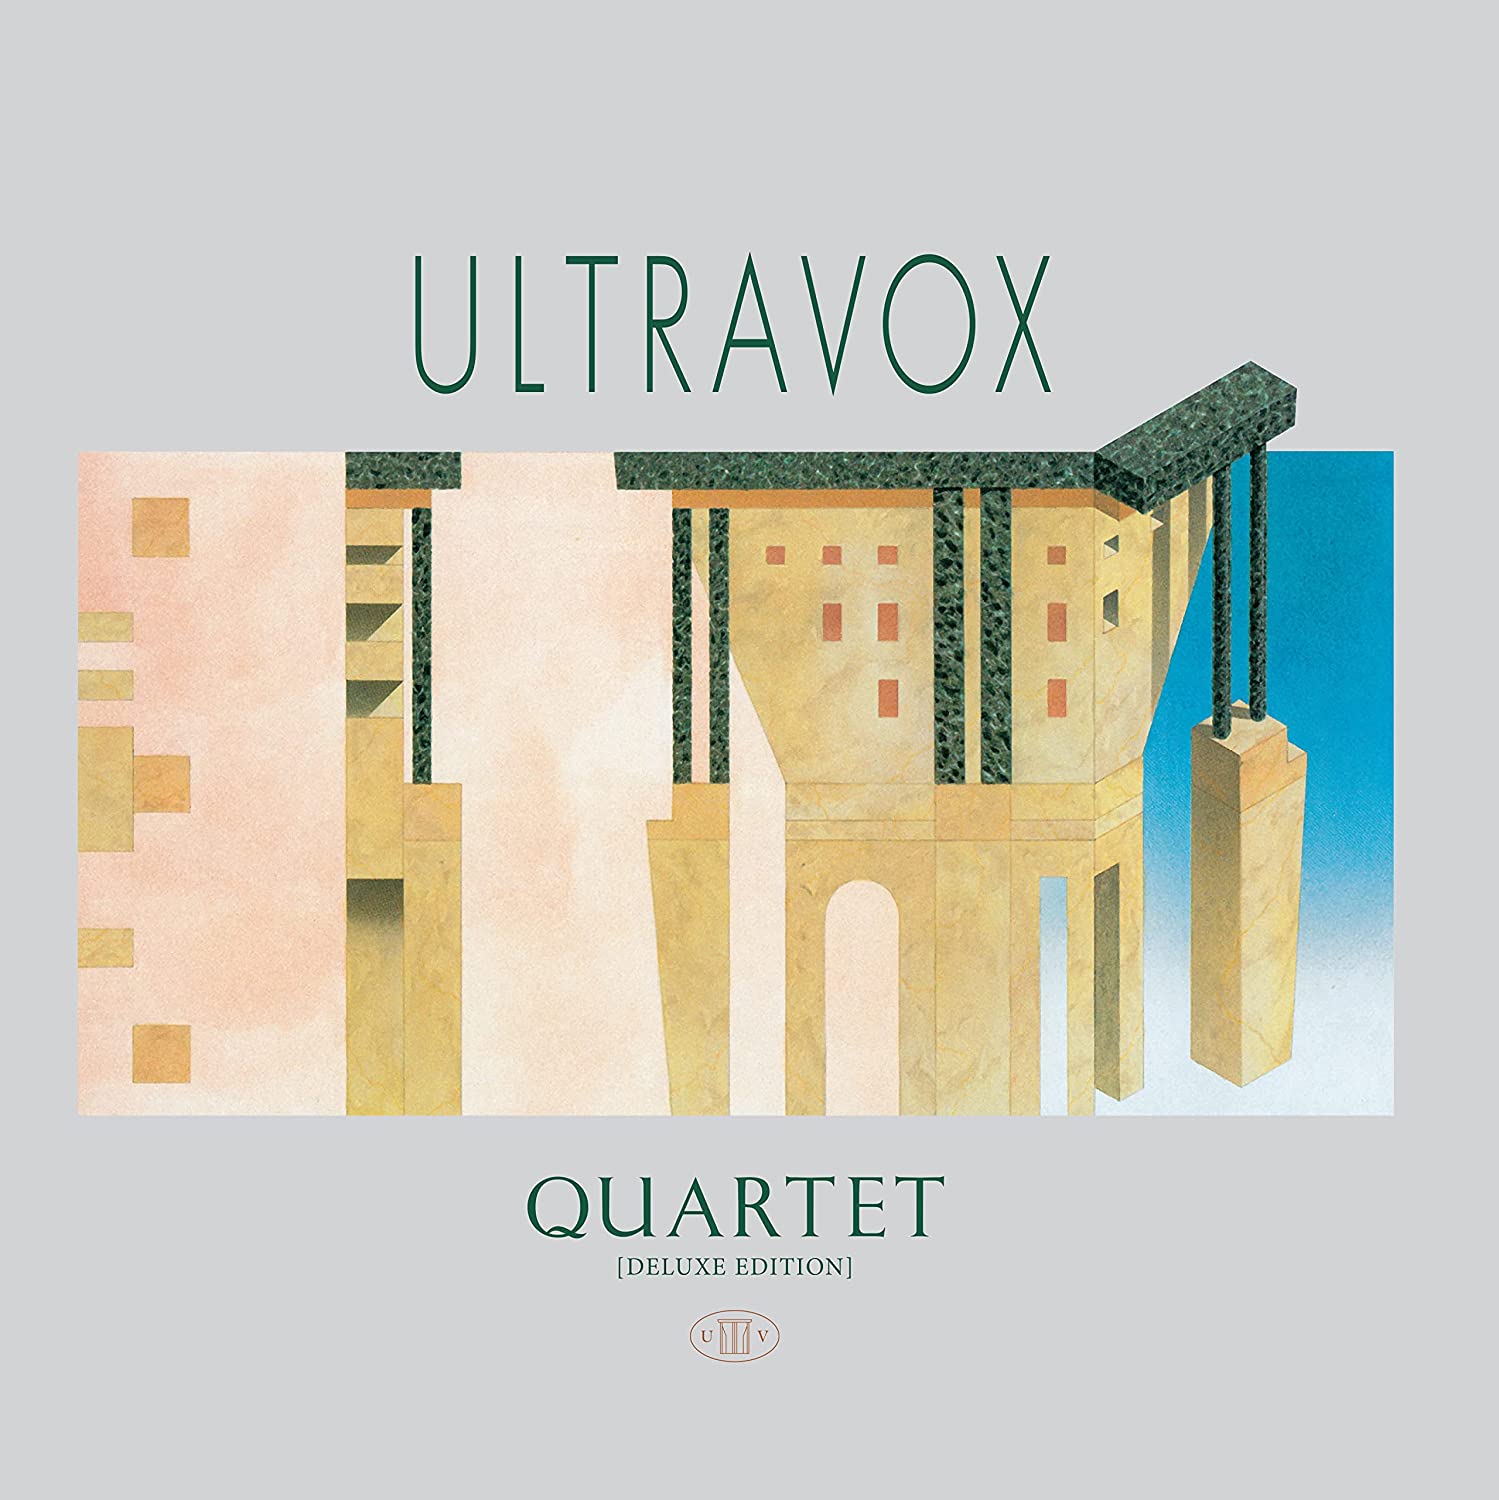 Ultravox / Quartet 40th anniversary reissue